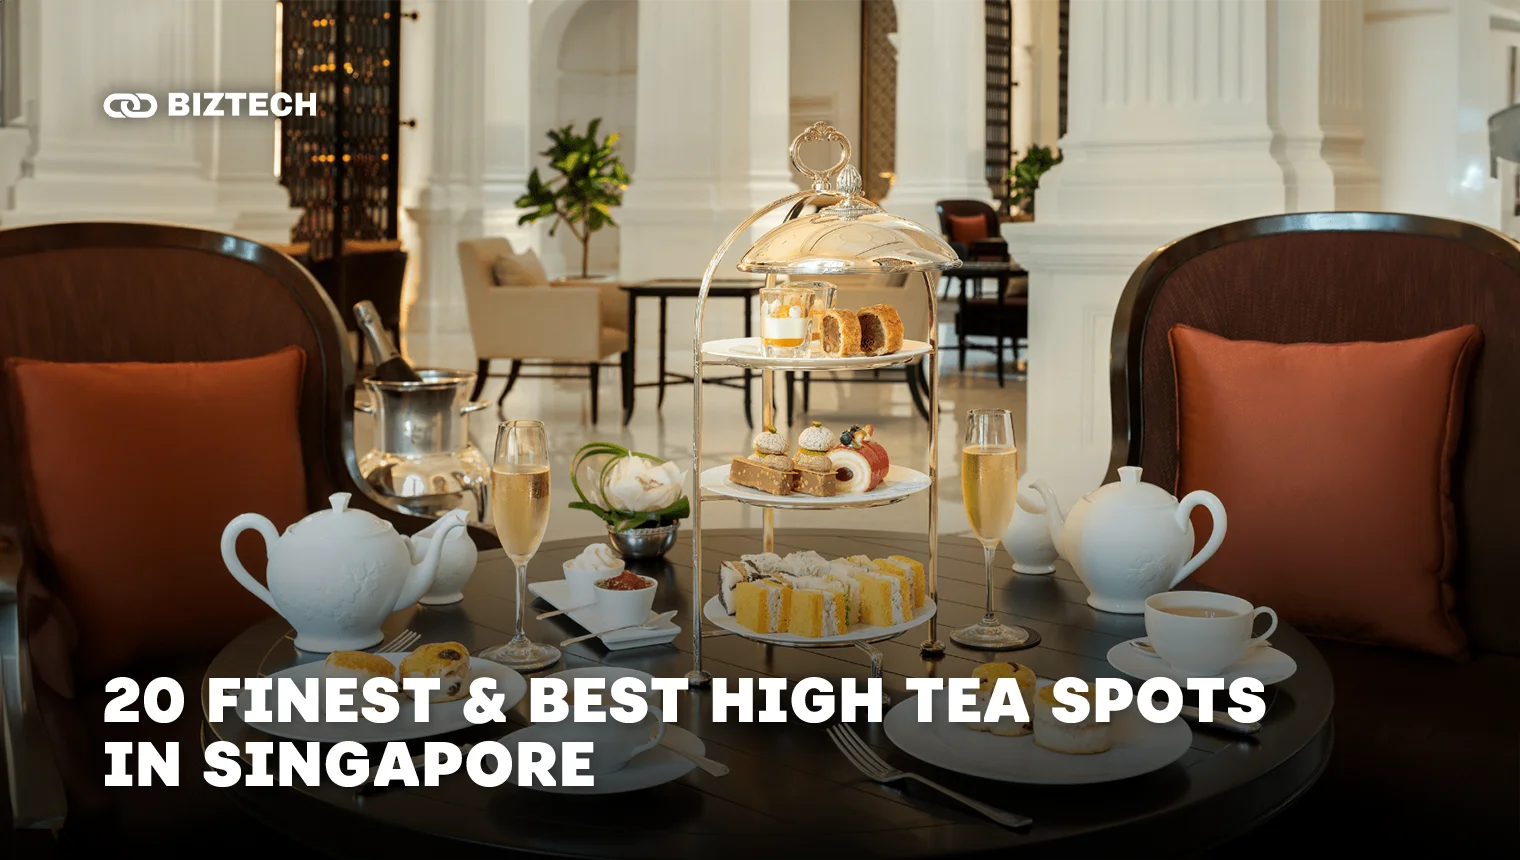 20 Finest & Best High Tea Spots in Singapore